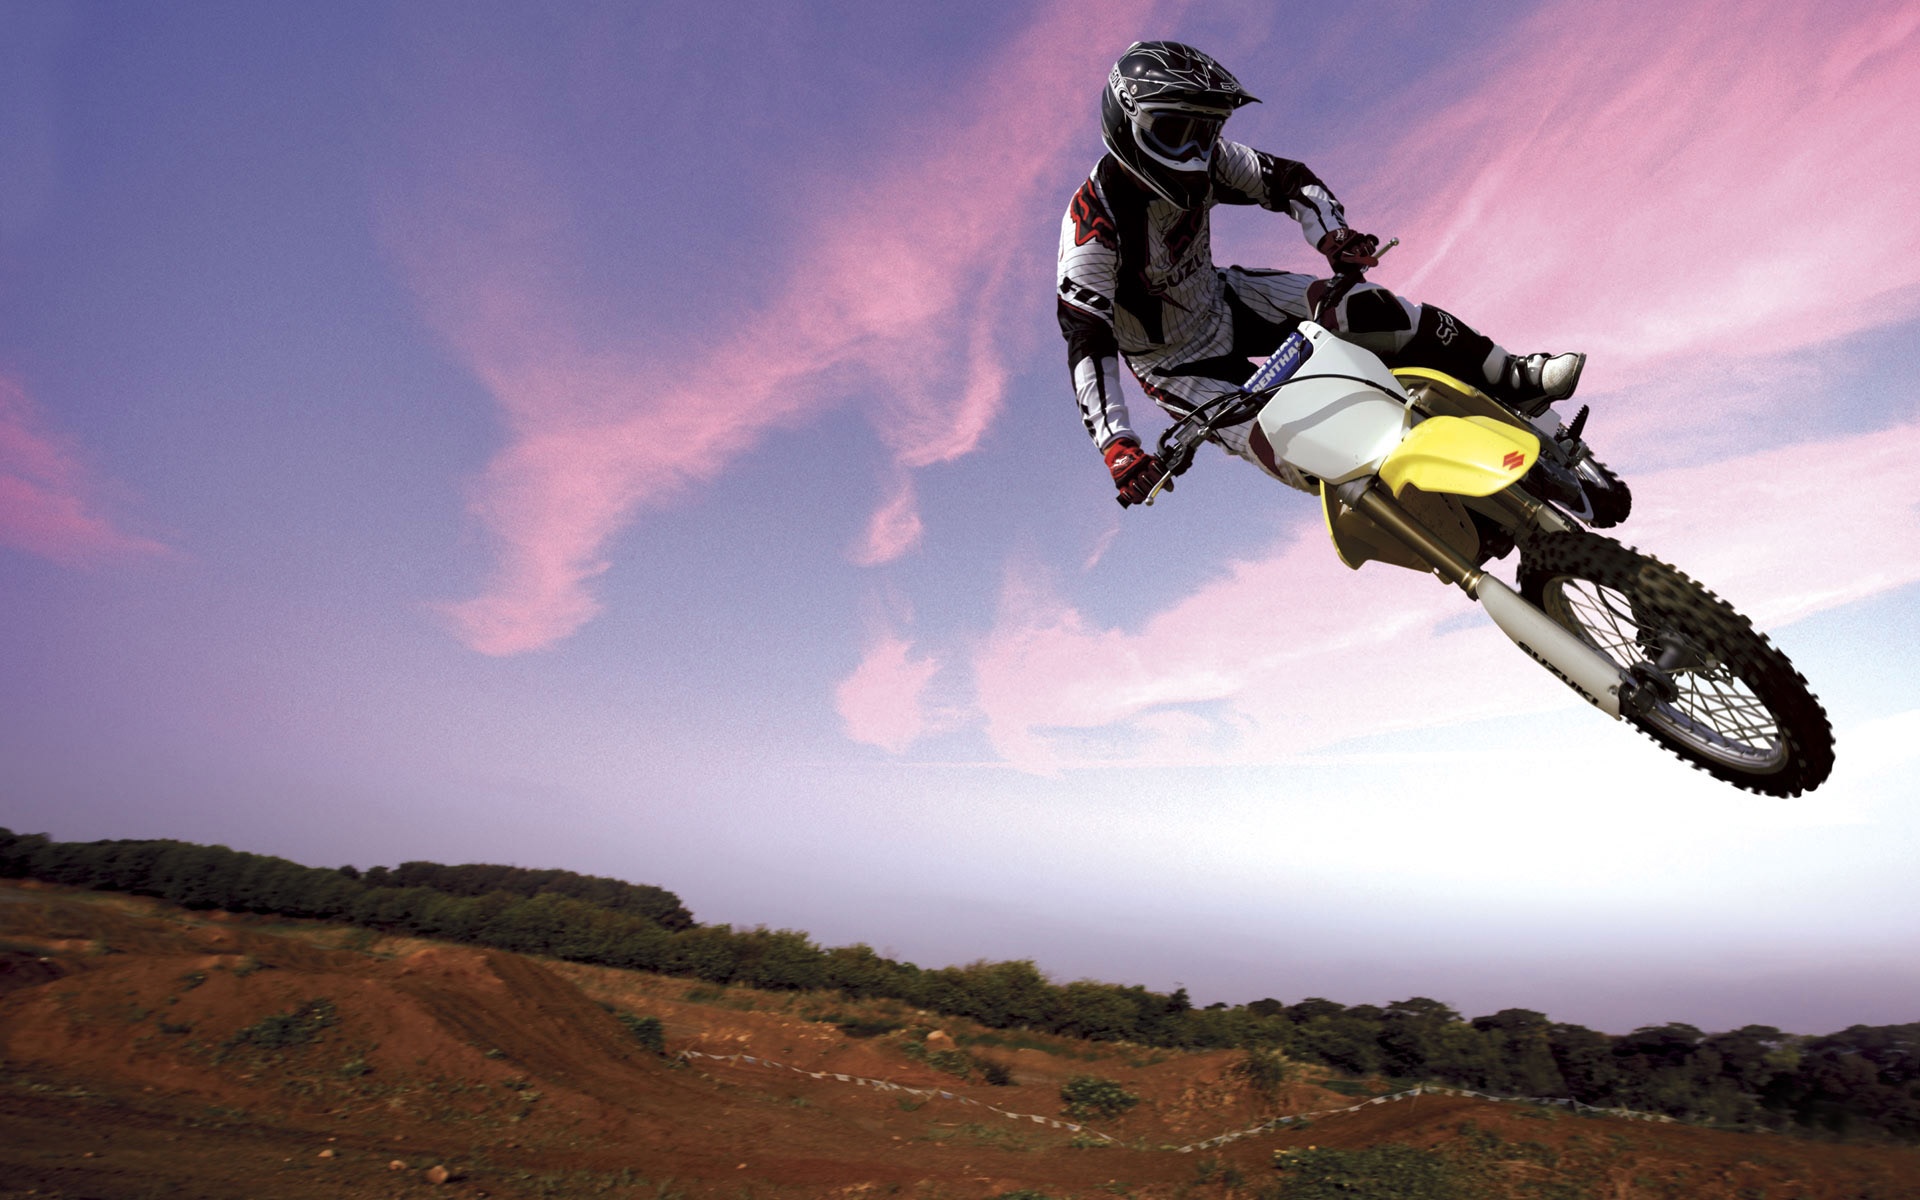 Amazing Motocross Bike Stunt